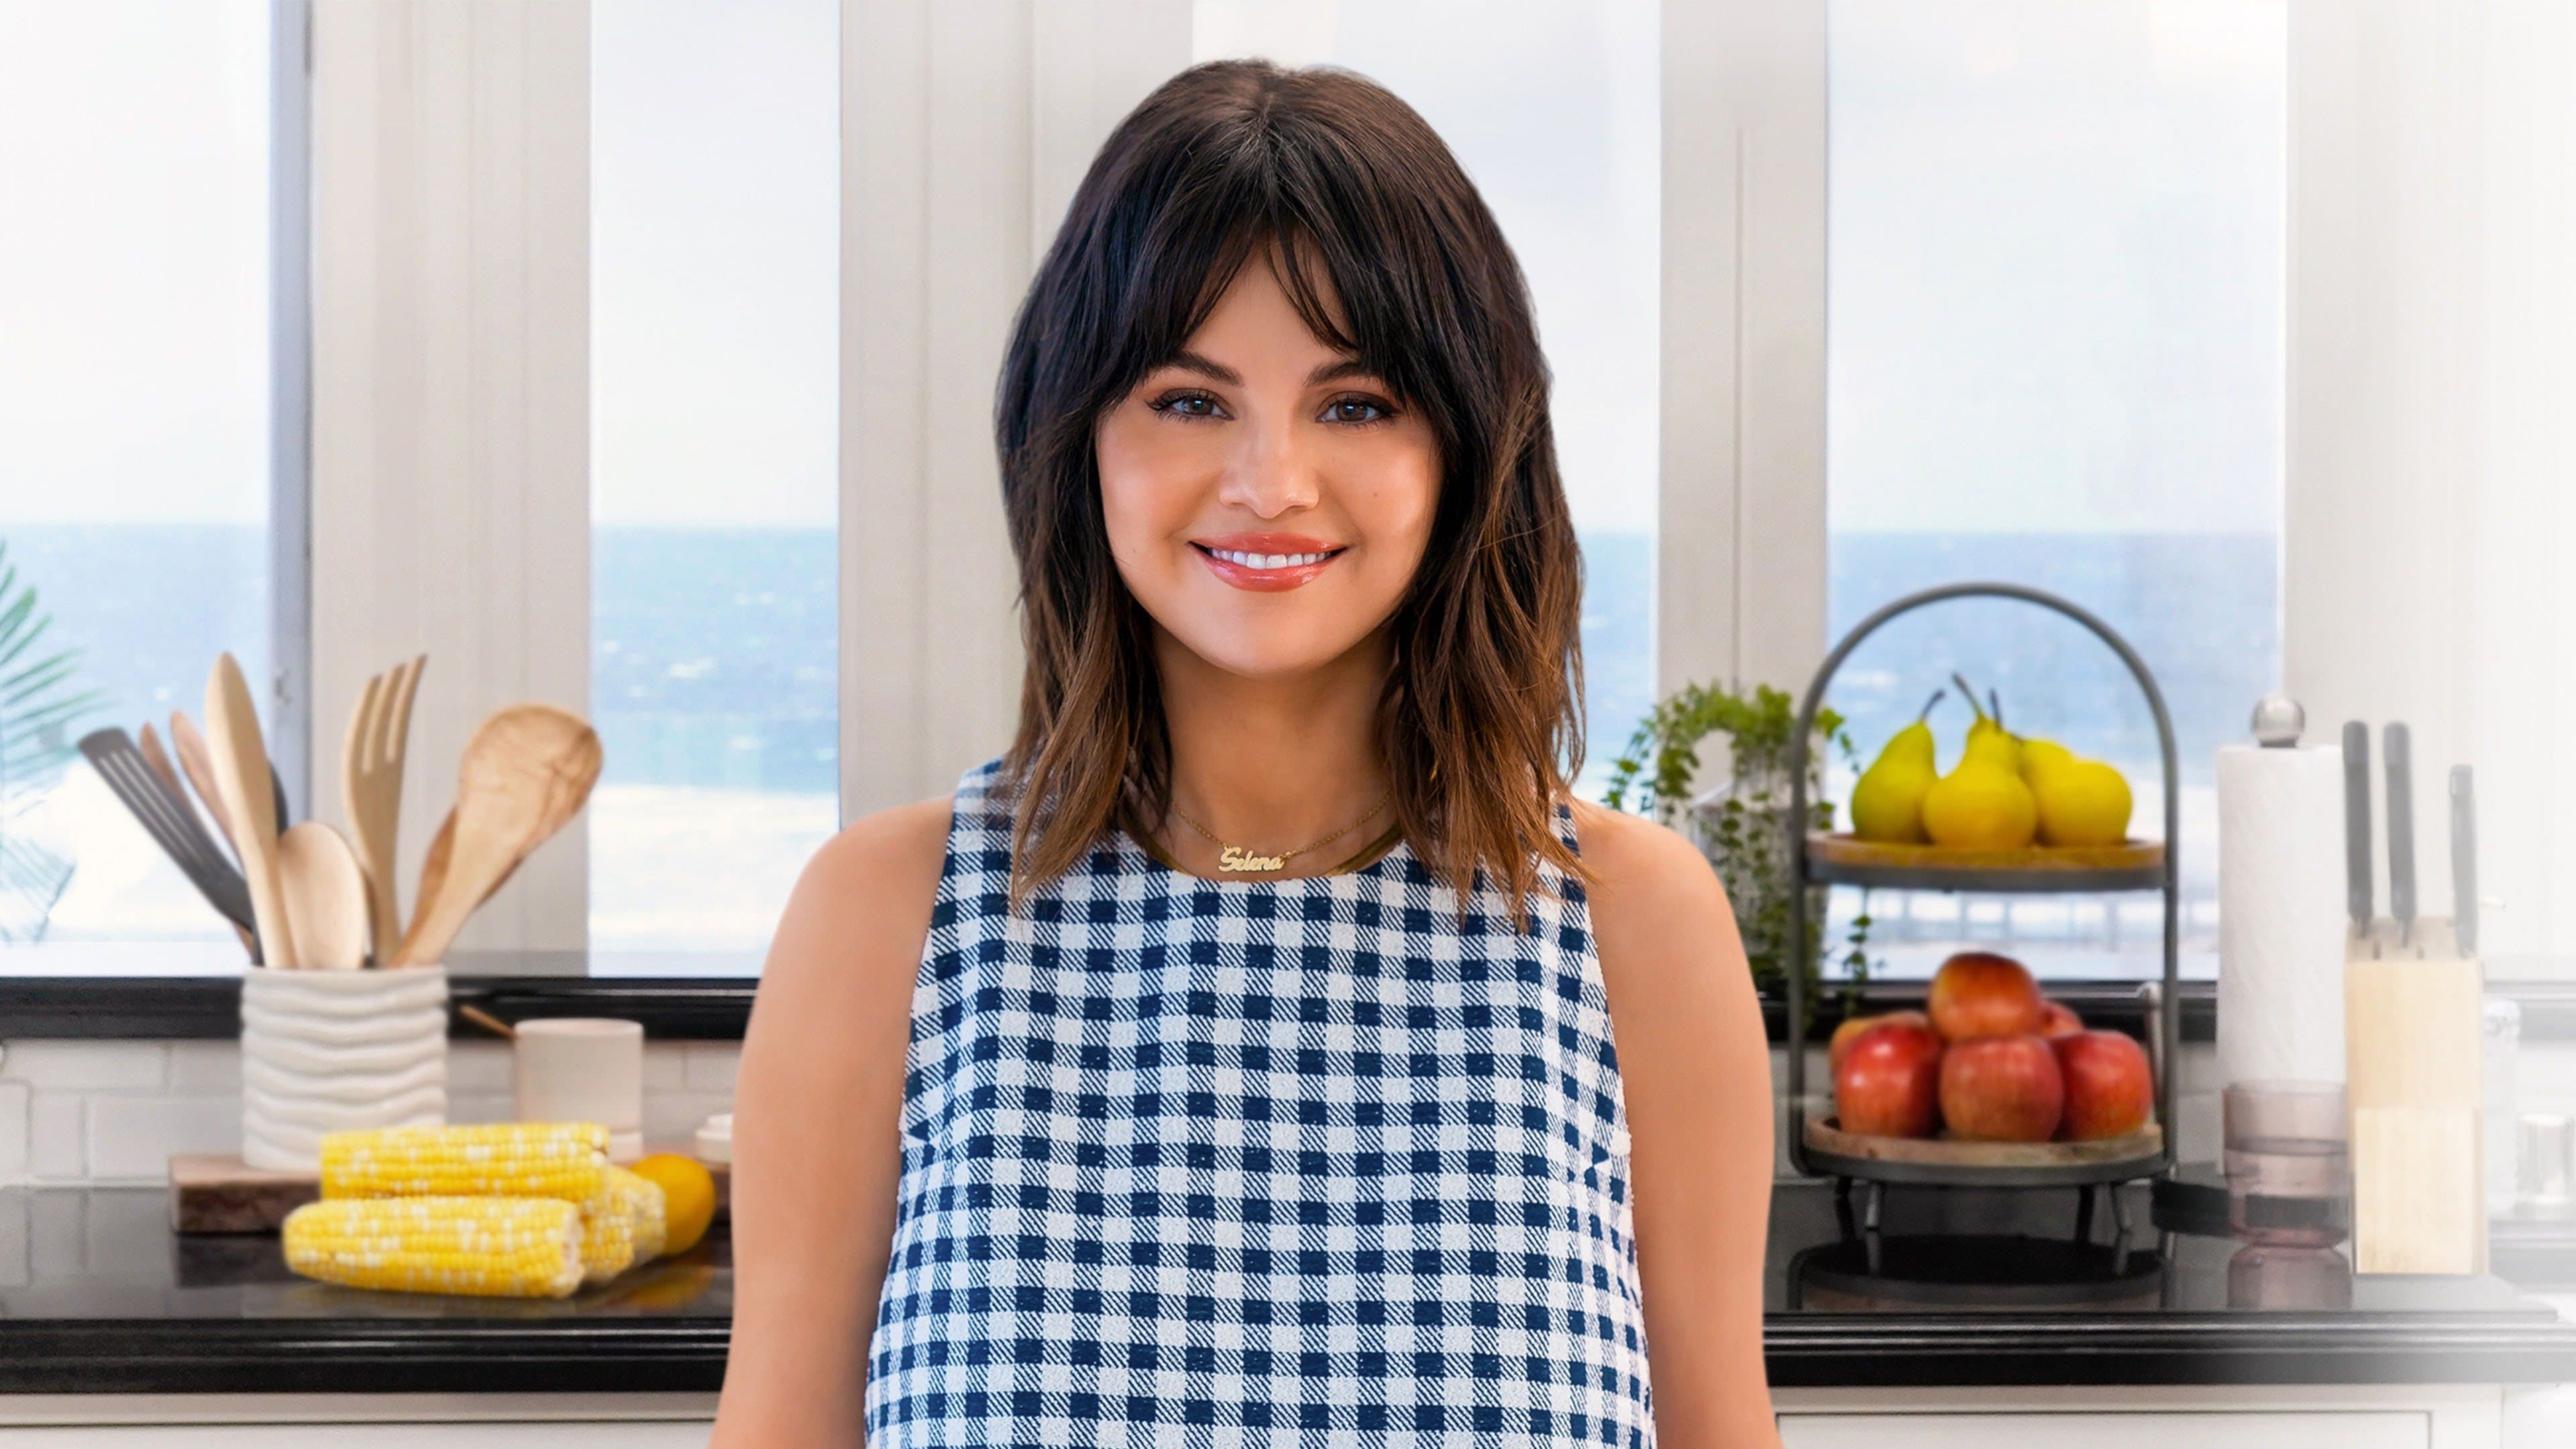 Selena + Chef Gallery Image